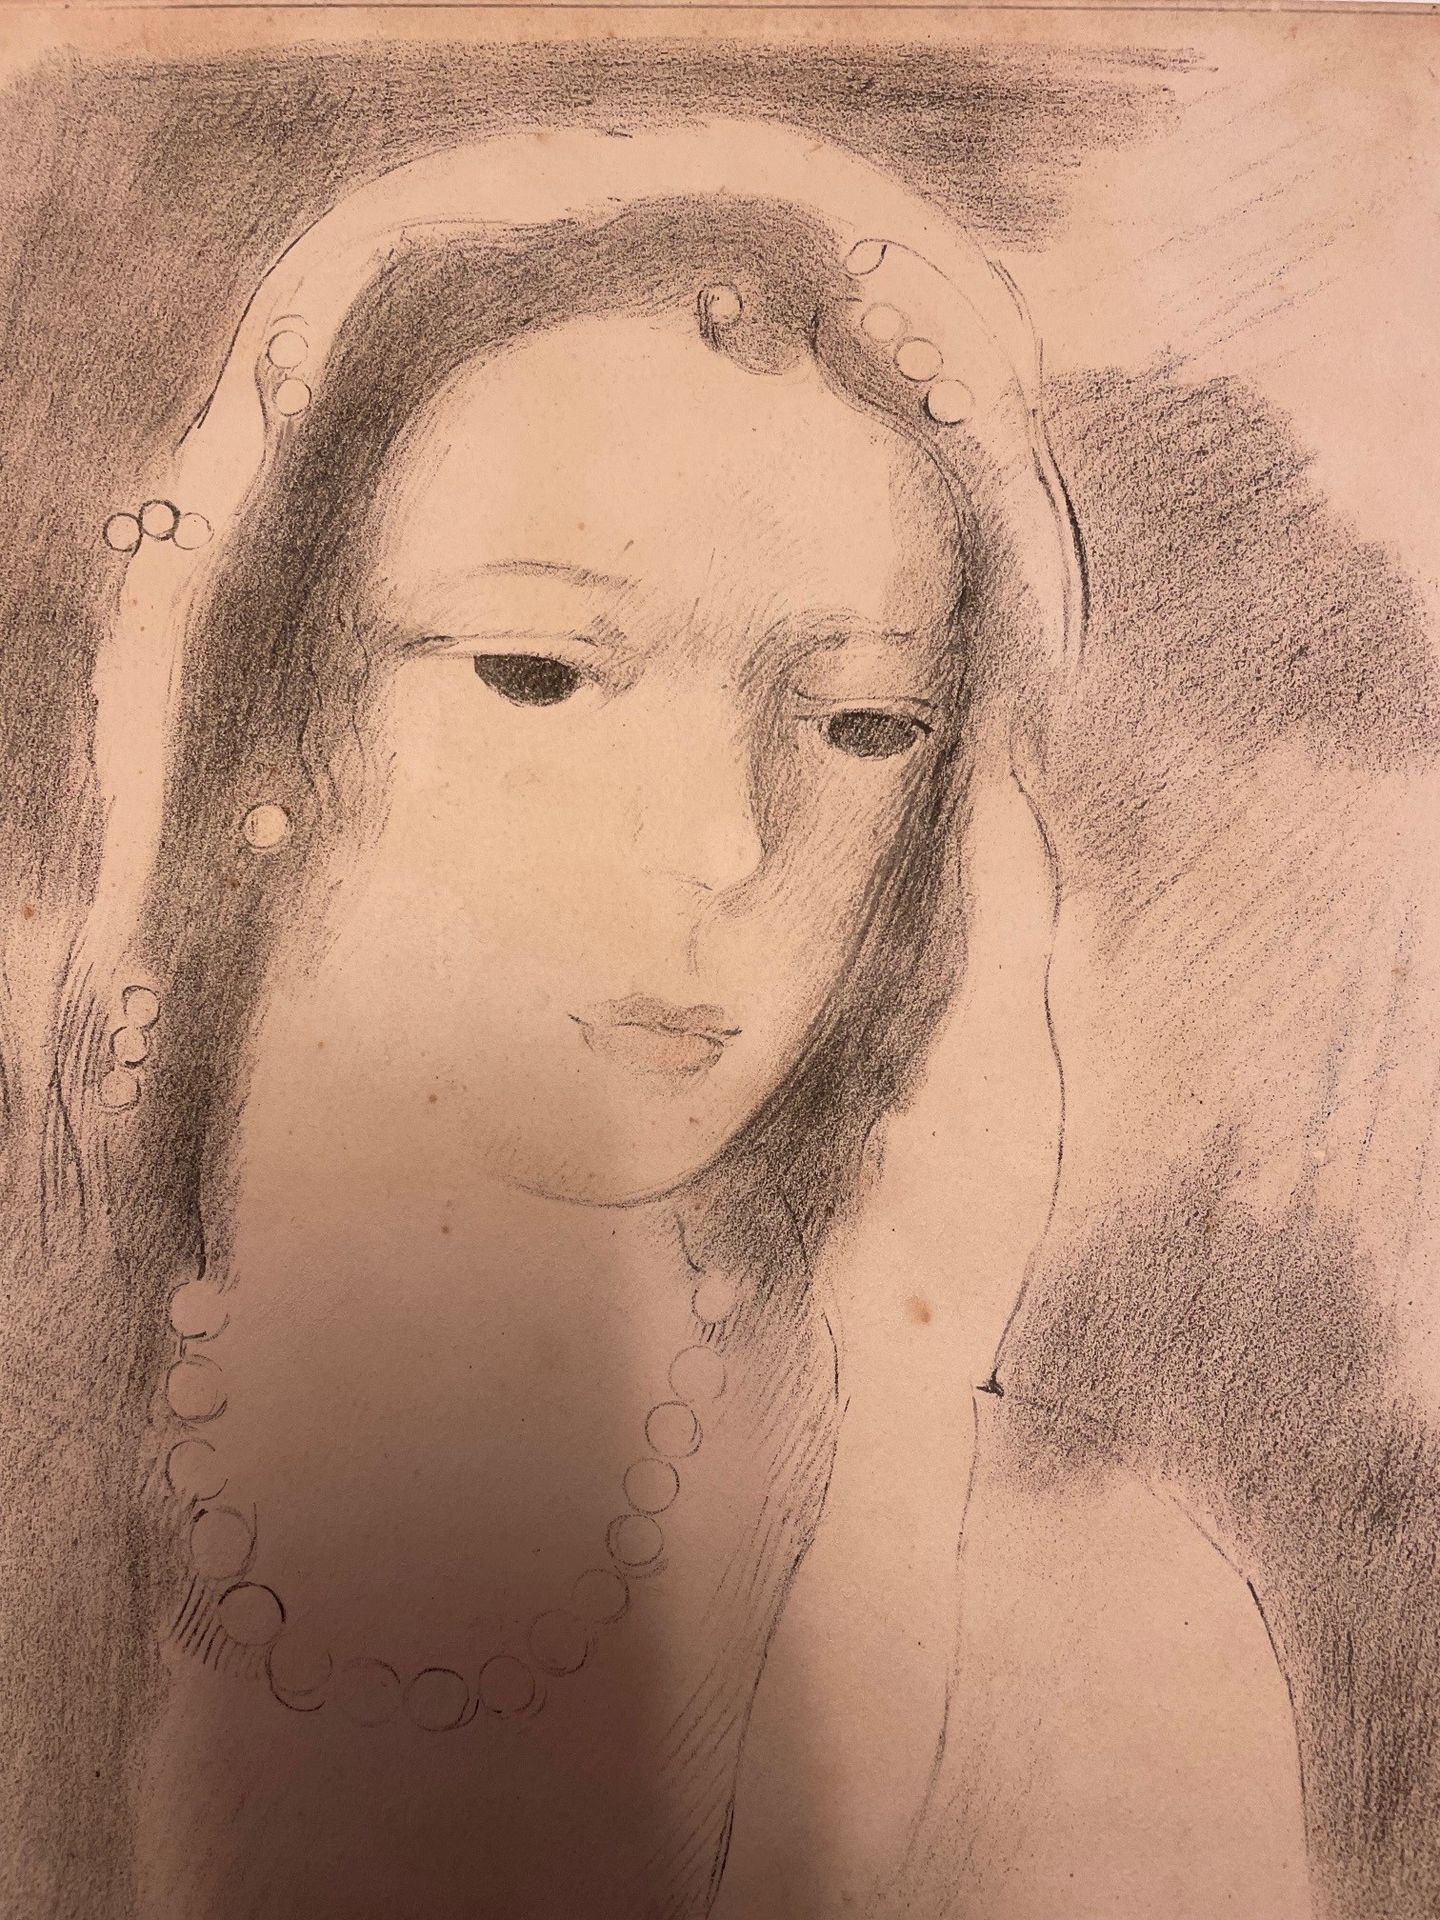 Null "戴着围巾的年轻女子的画像

有框架的作品，有签名。